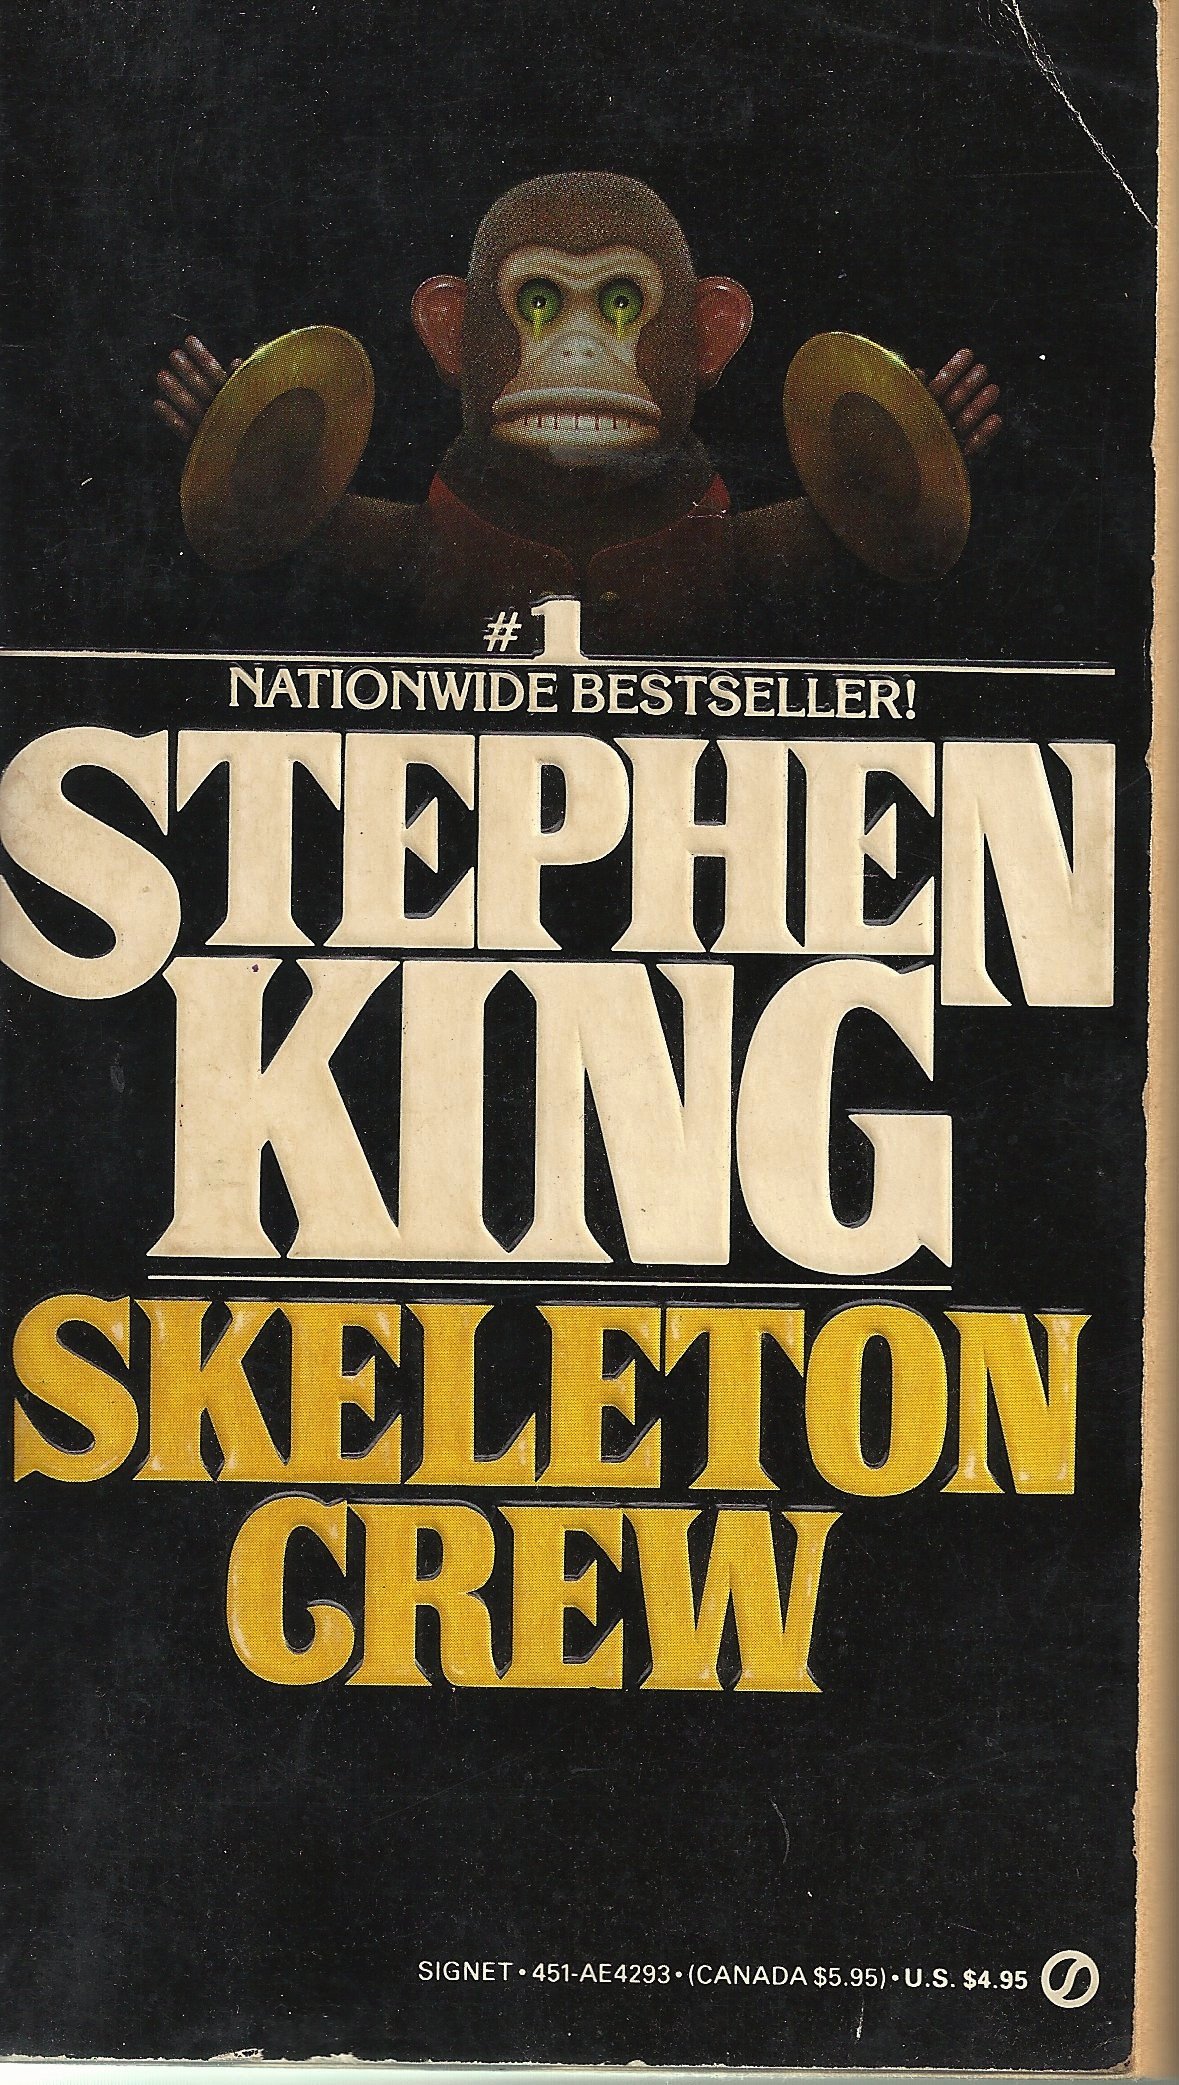 Skeleton crew. King Stephen "Skeleton Crew". Steven King the Skeleton Crew.